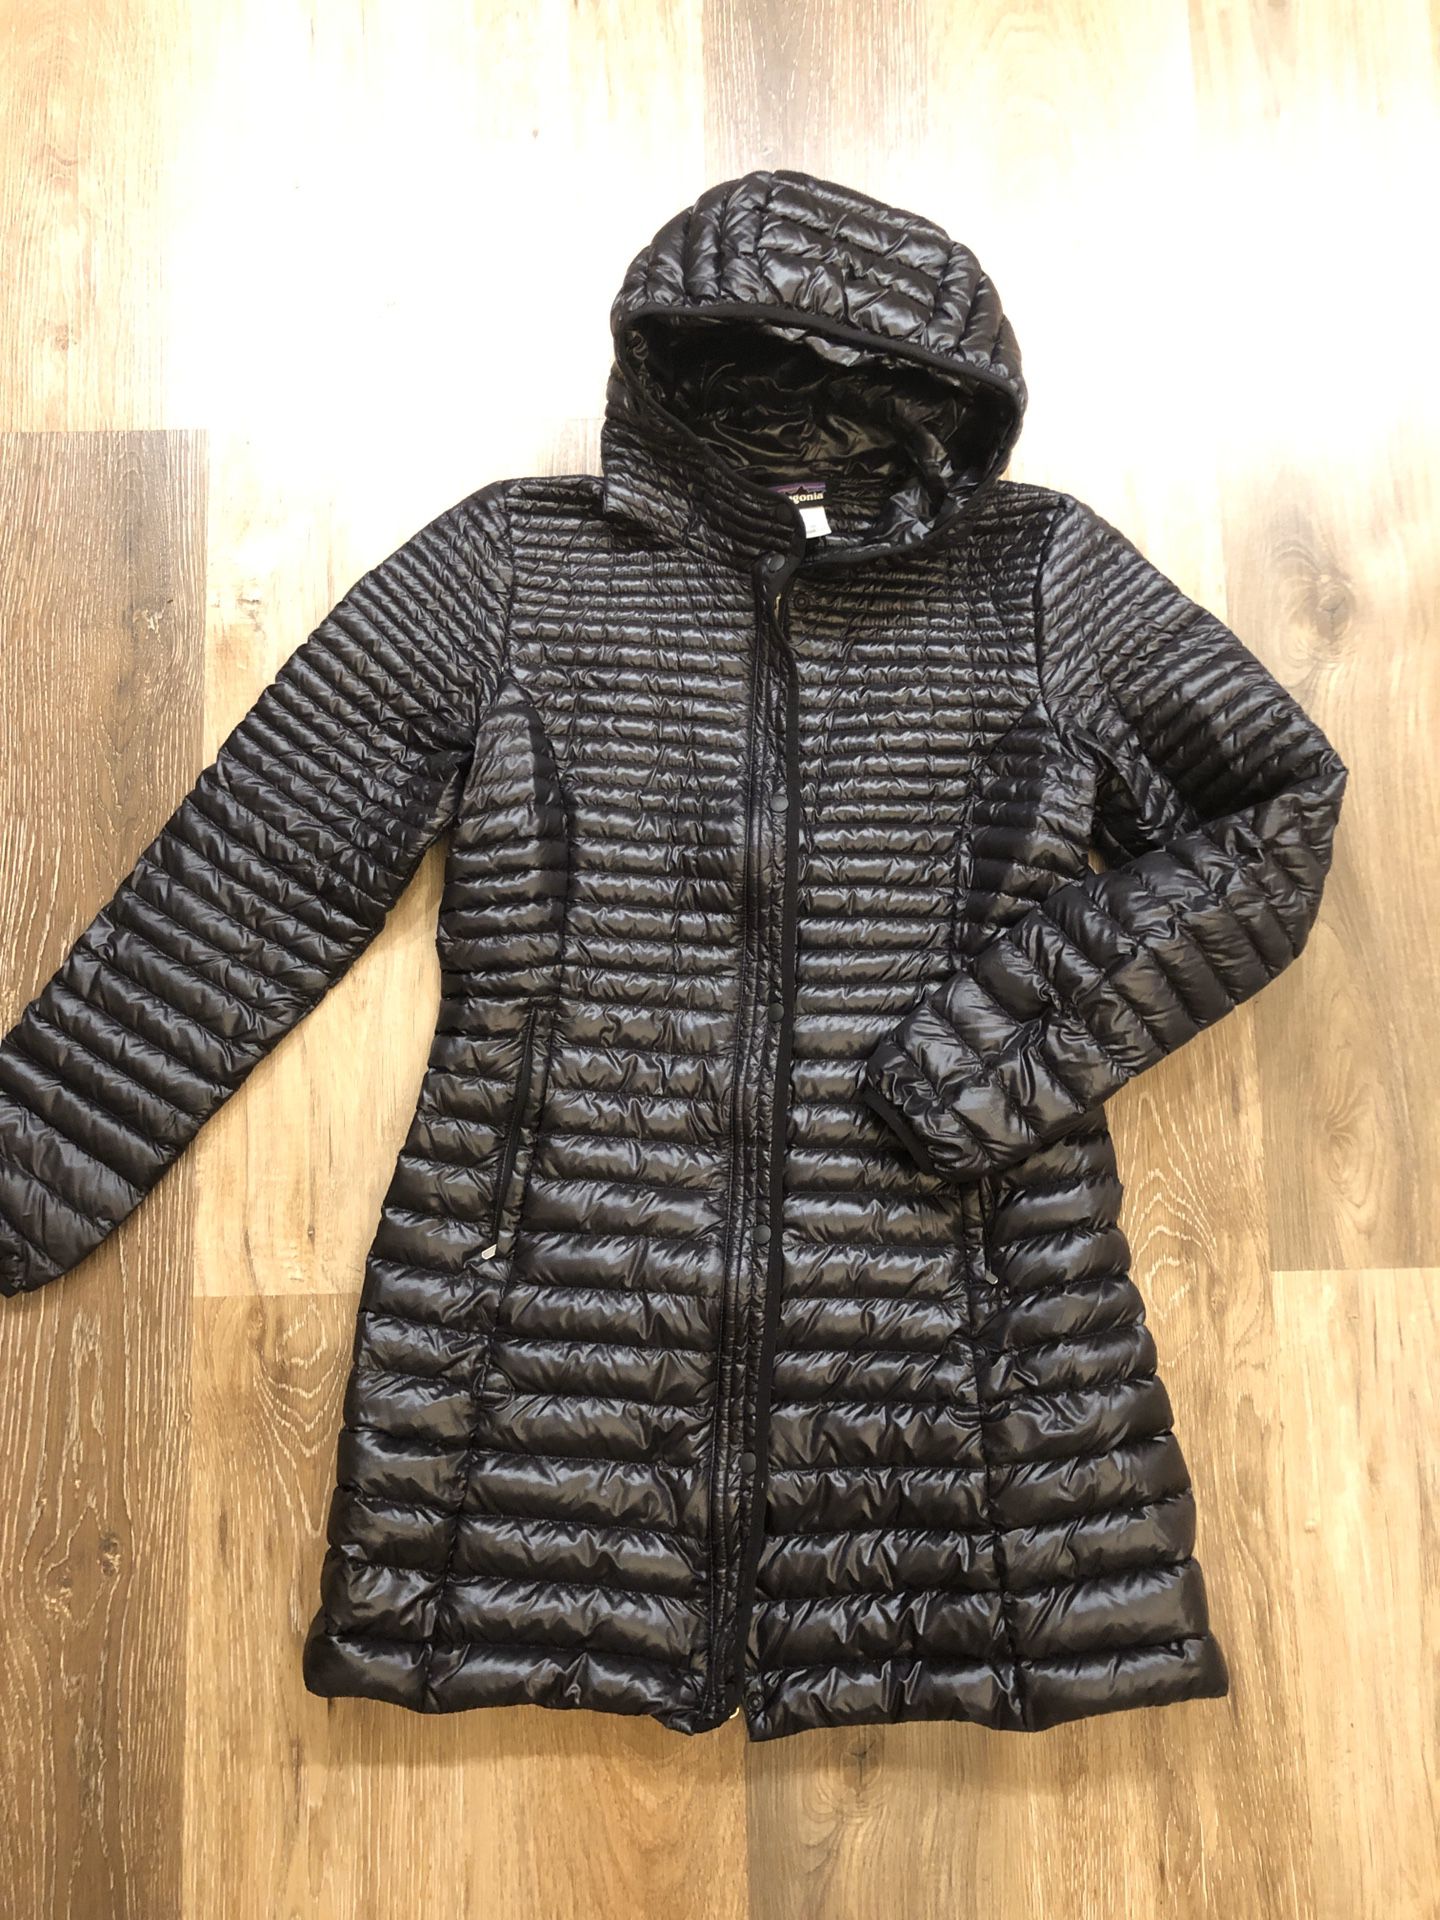 Patagonia ultra light down coat, size L,$70.